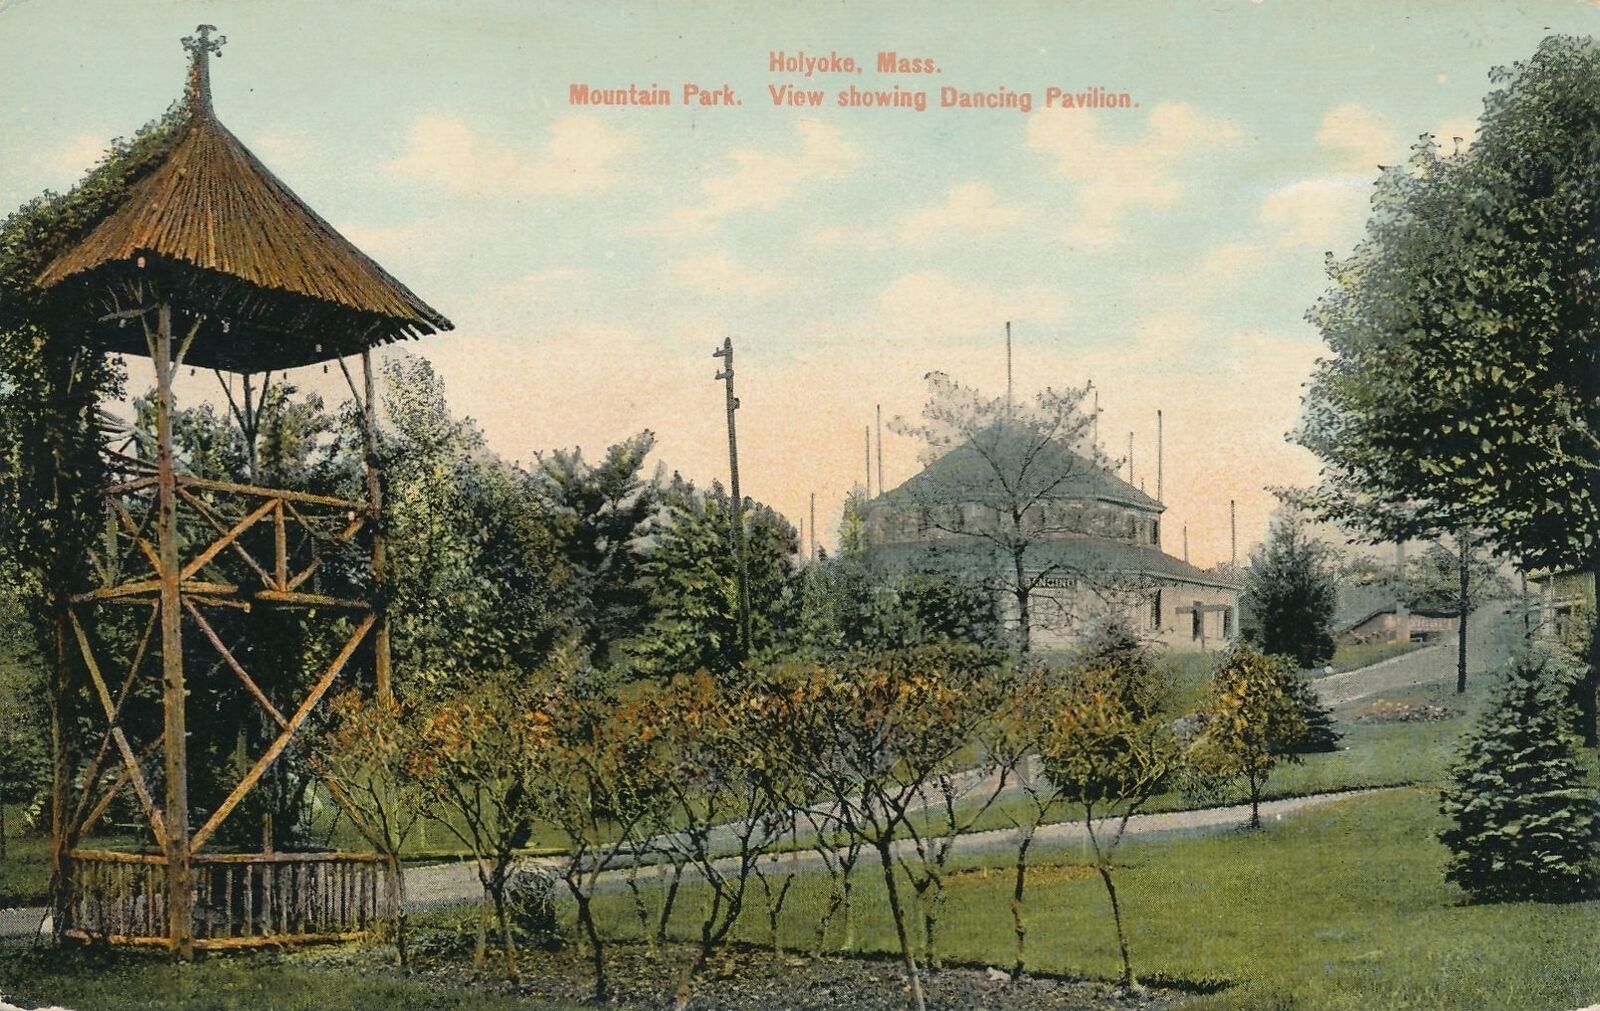 HOLYOKE MA - Mountain Park View showing Dancing Pavilion